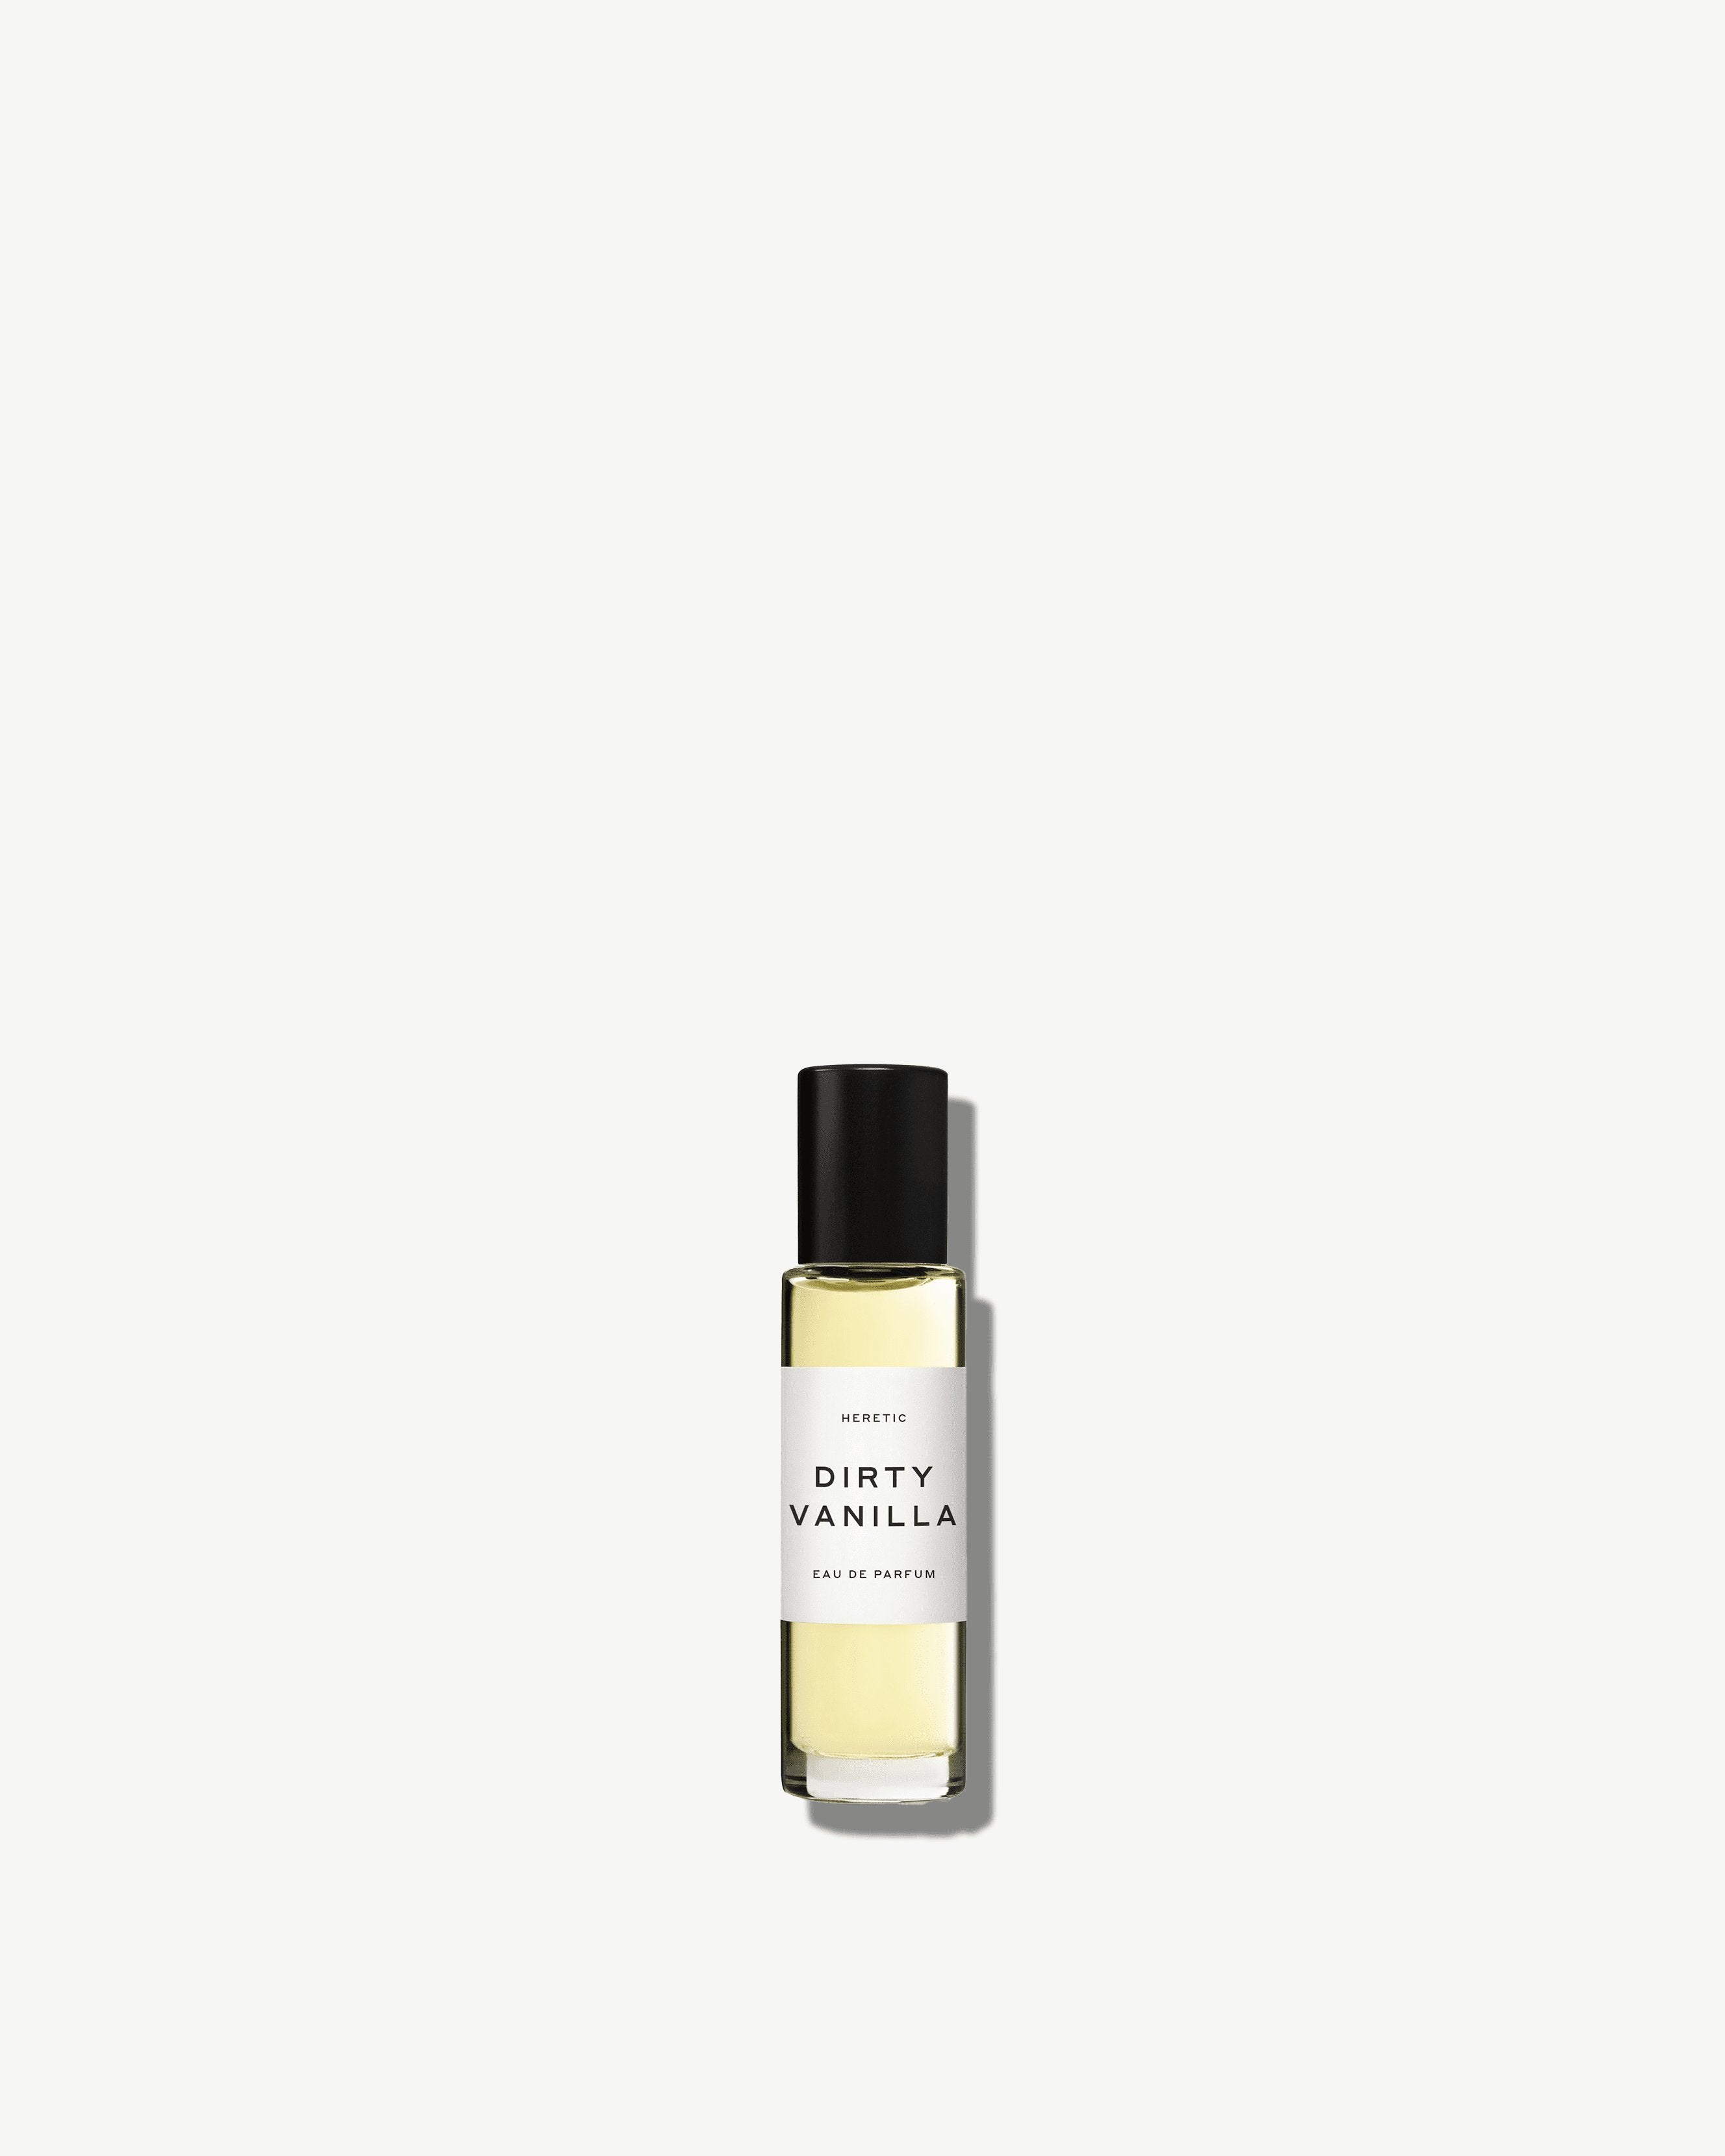 Heretic Dirty Vanilla Eau de Parfum | Credo